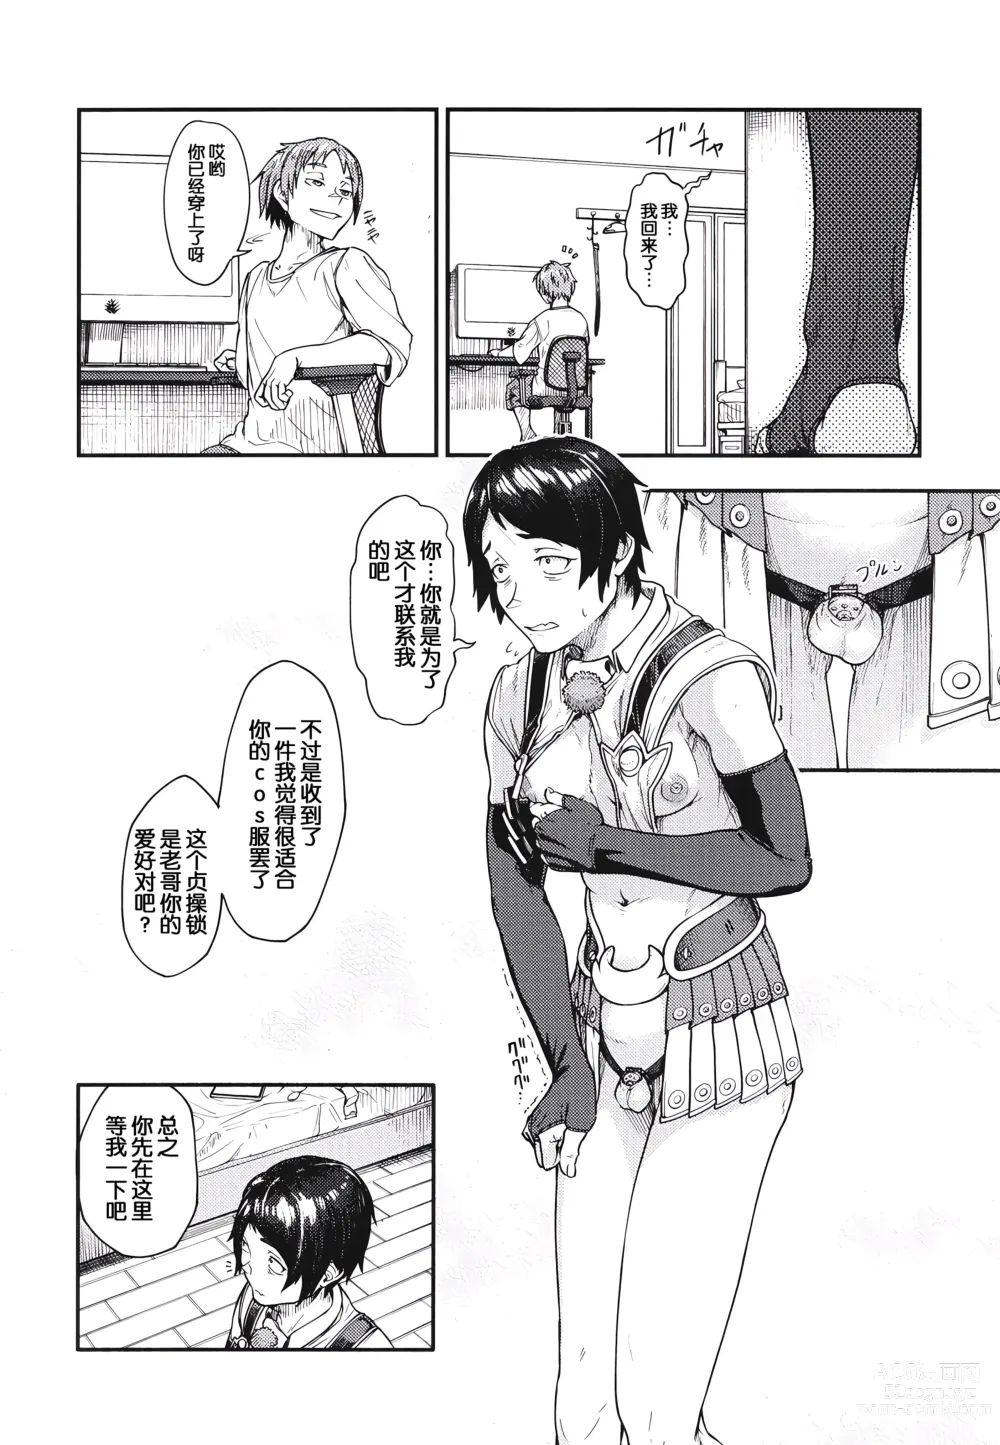 Page 7 of doujinshi MHD-01